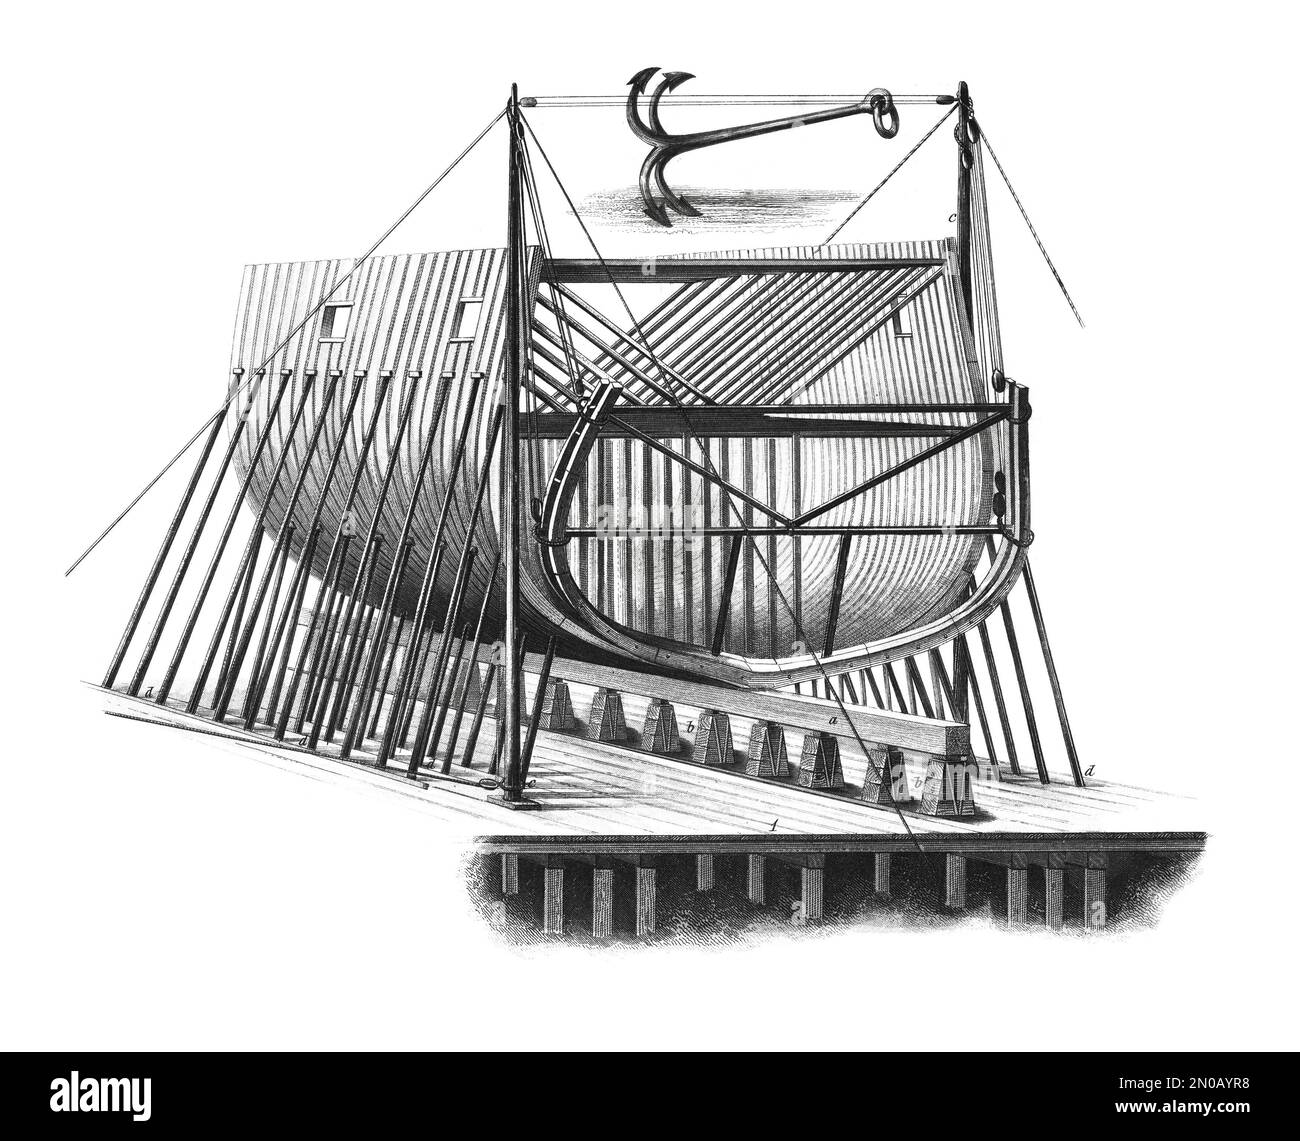 Illustration ancienne du cadre du navire et d'un ancrage. Gravure publiée dans Systematischer Bilder Atlas - Kriegwesen und Seewesen, Ikonographische Ency Banque D'Images